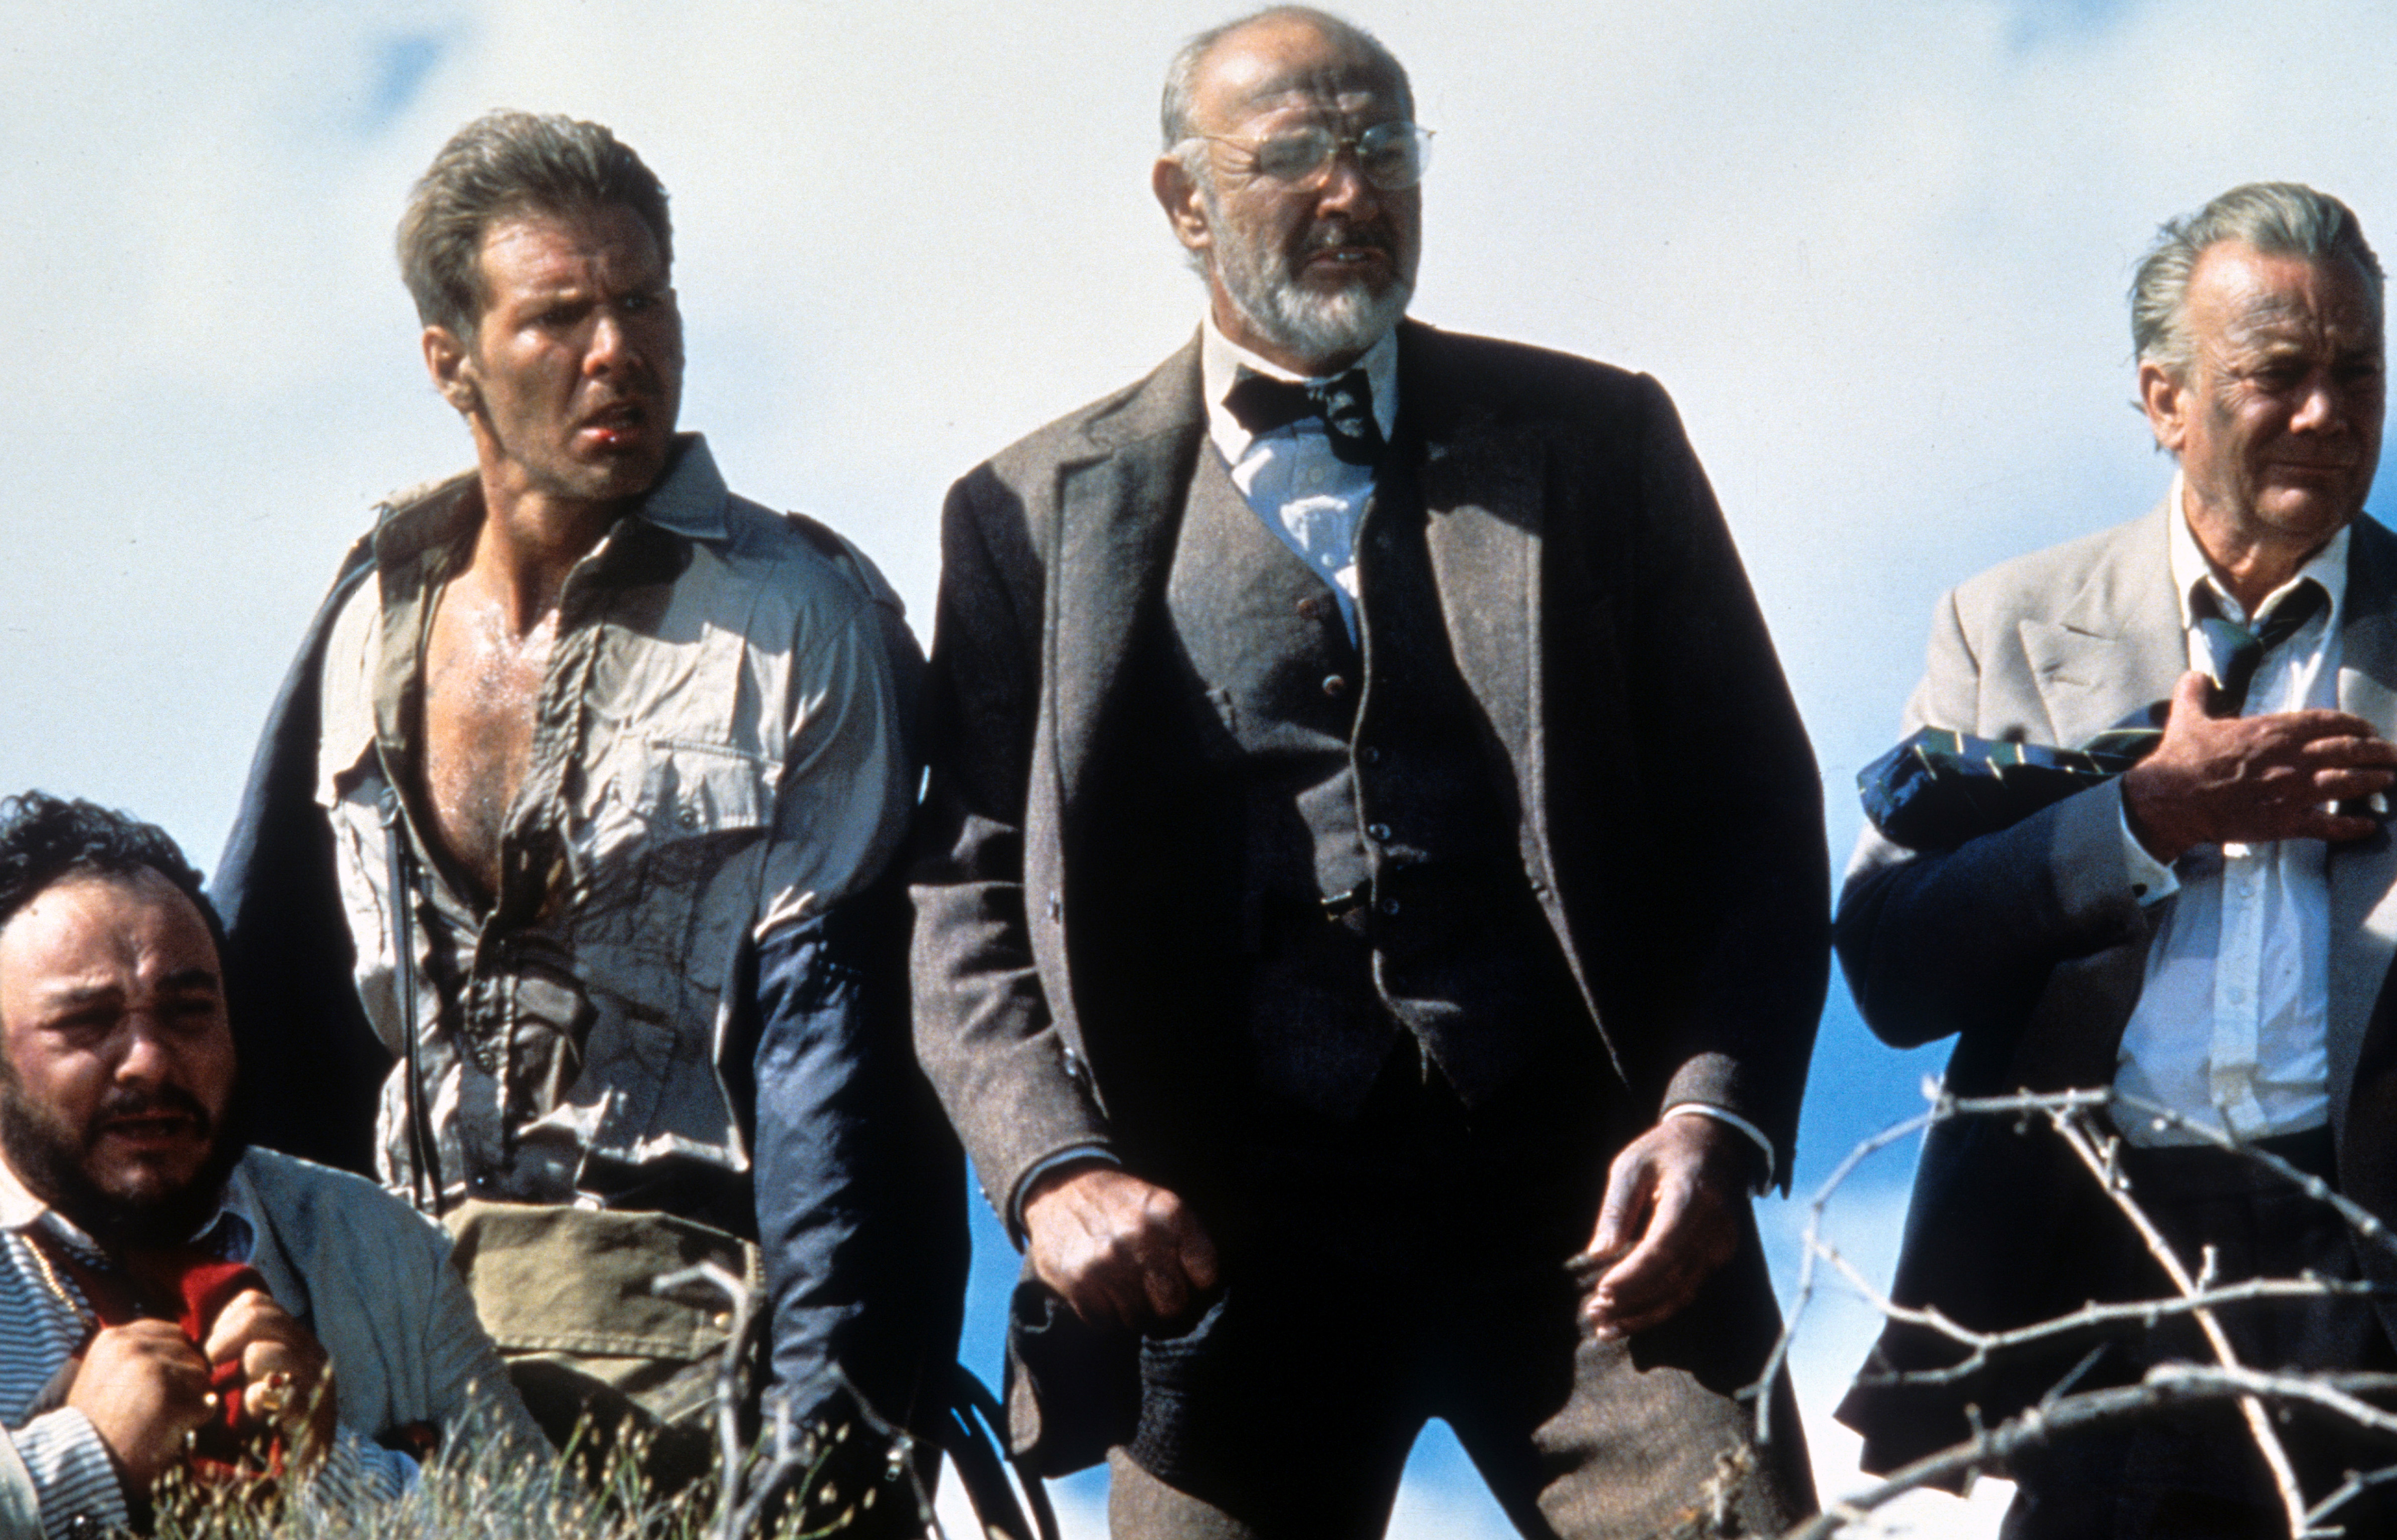 Sean Connery, Harrison Ford, Denholm Elliott, and John Rhys-Davies in Indiana Jones and the Last Crusade (1989)